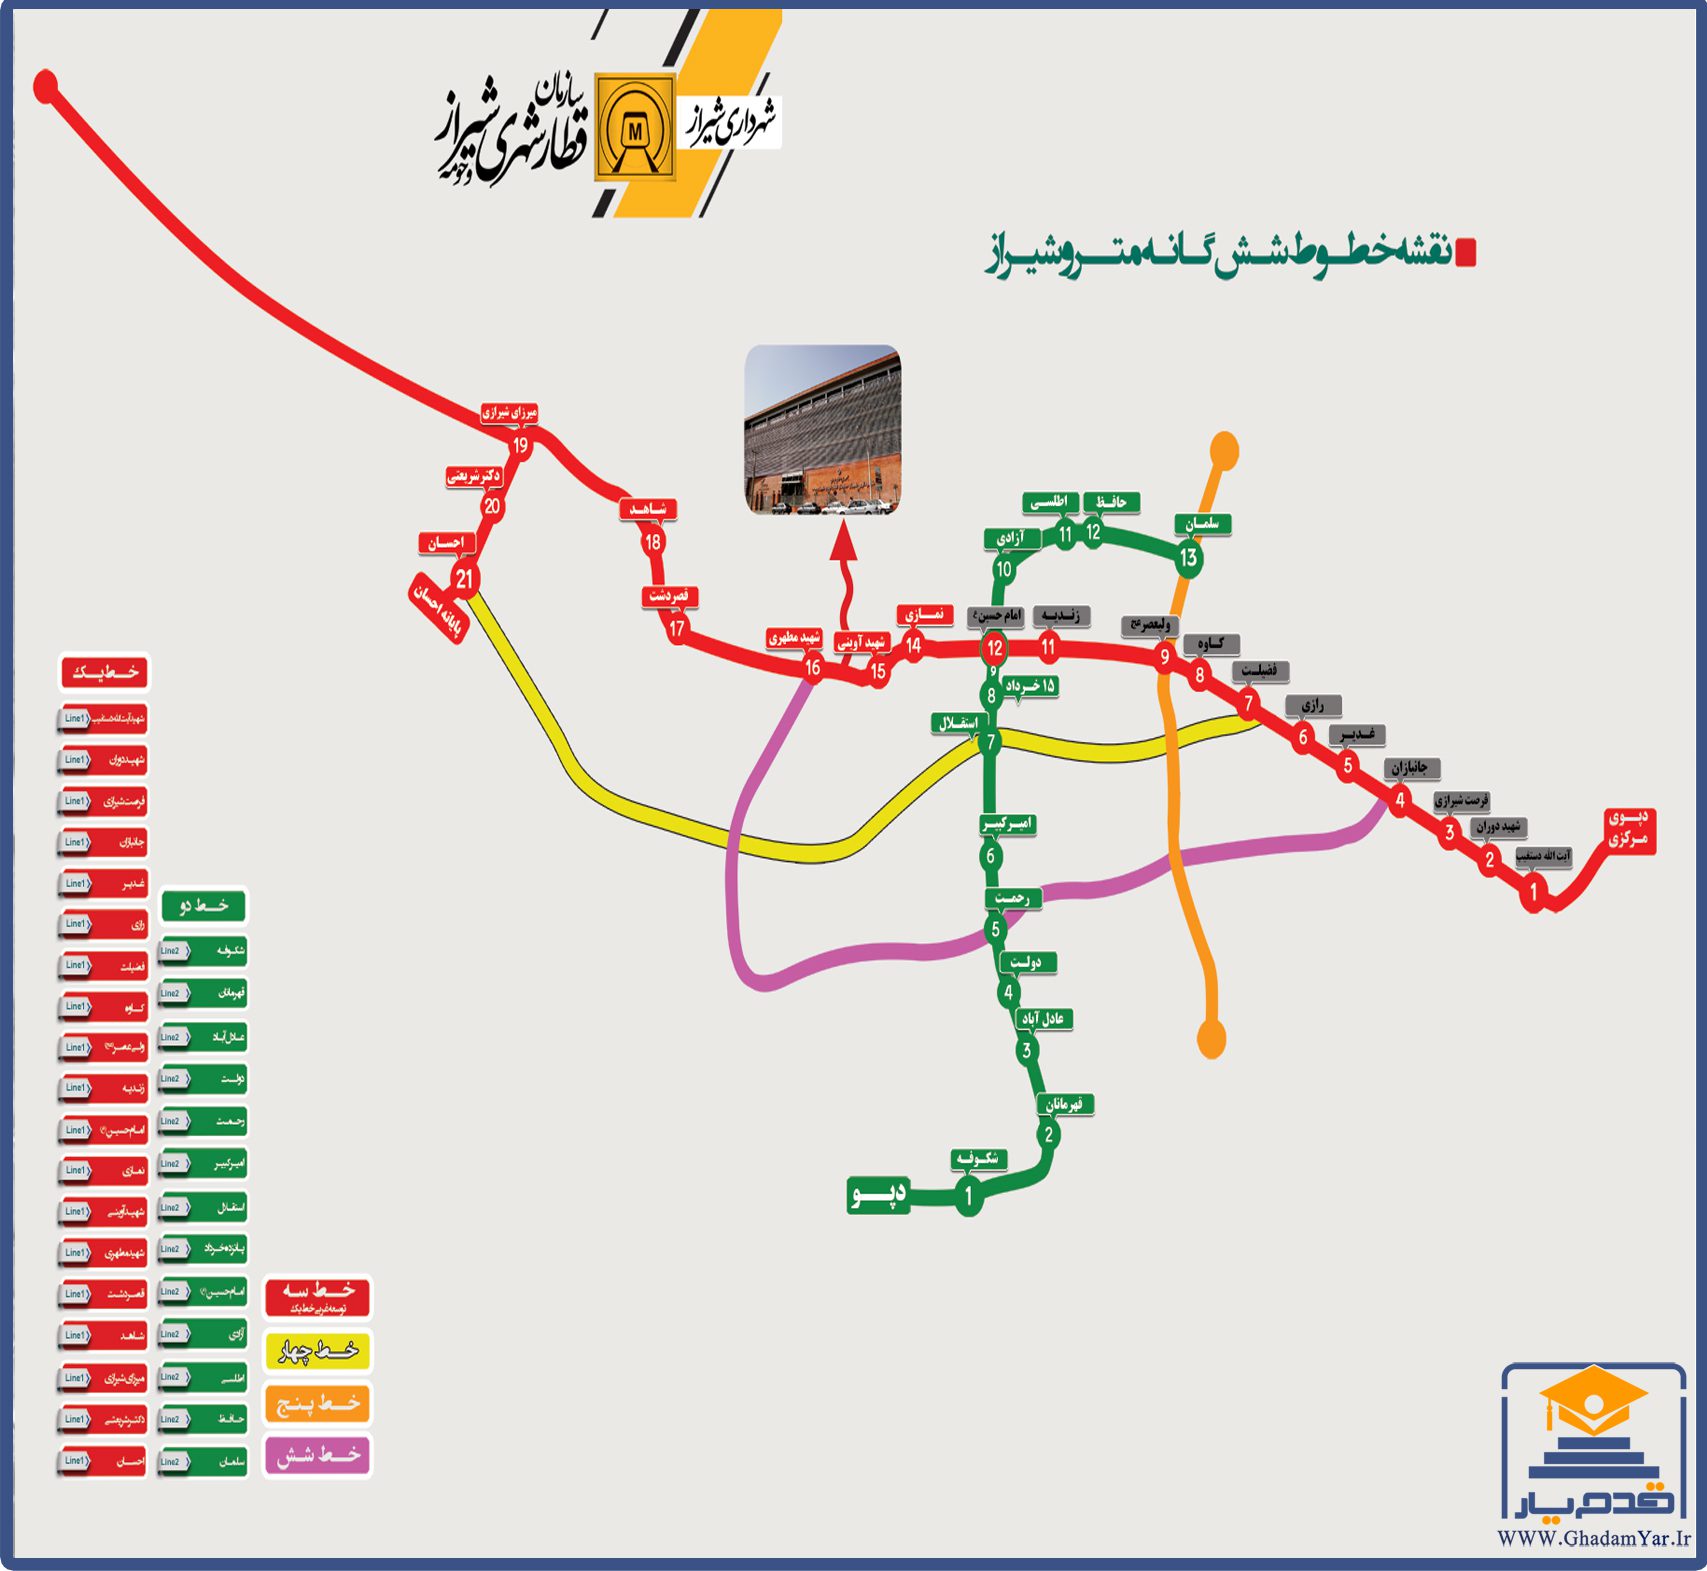 نقشه مترو شیراز - قدم یار